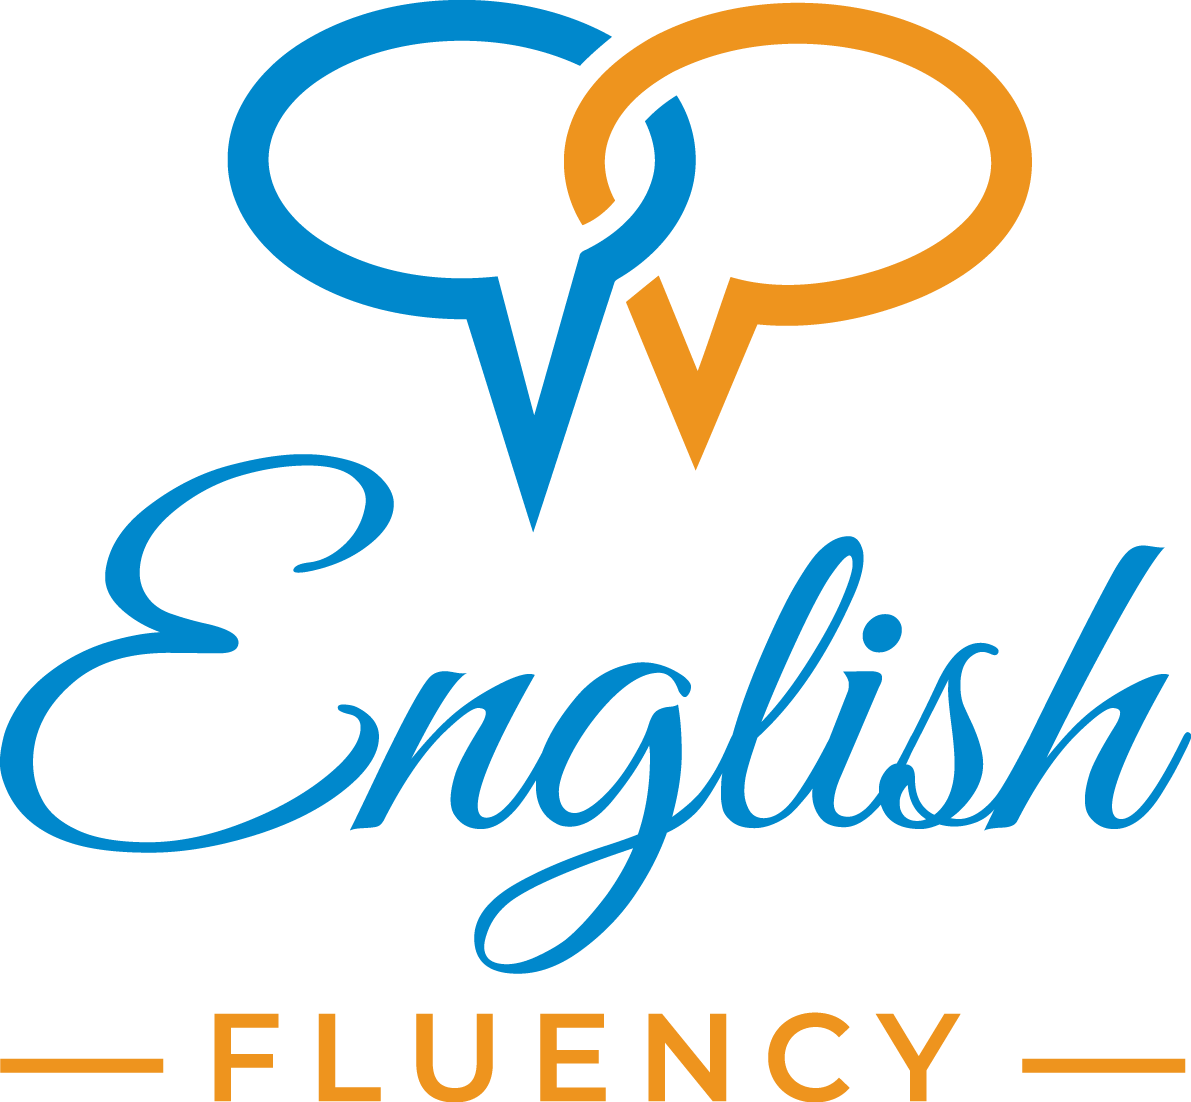 English Fluency